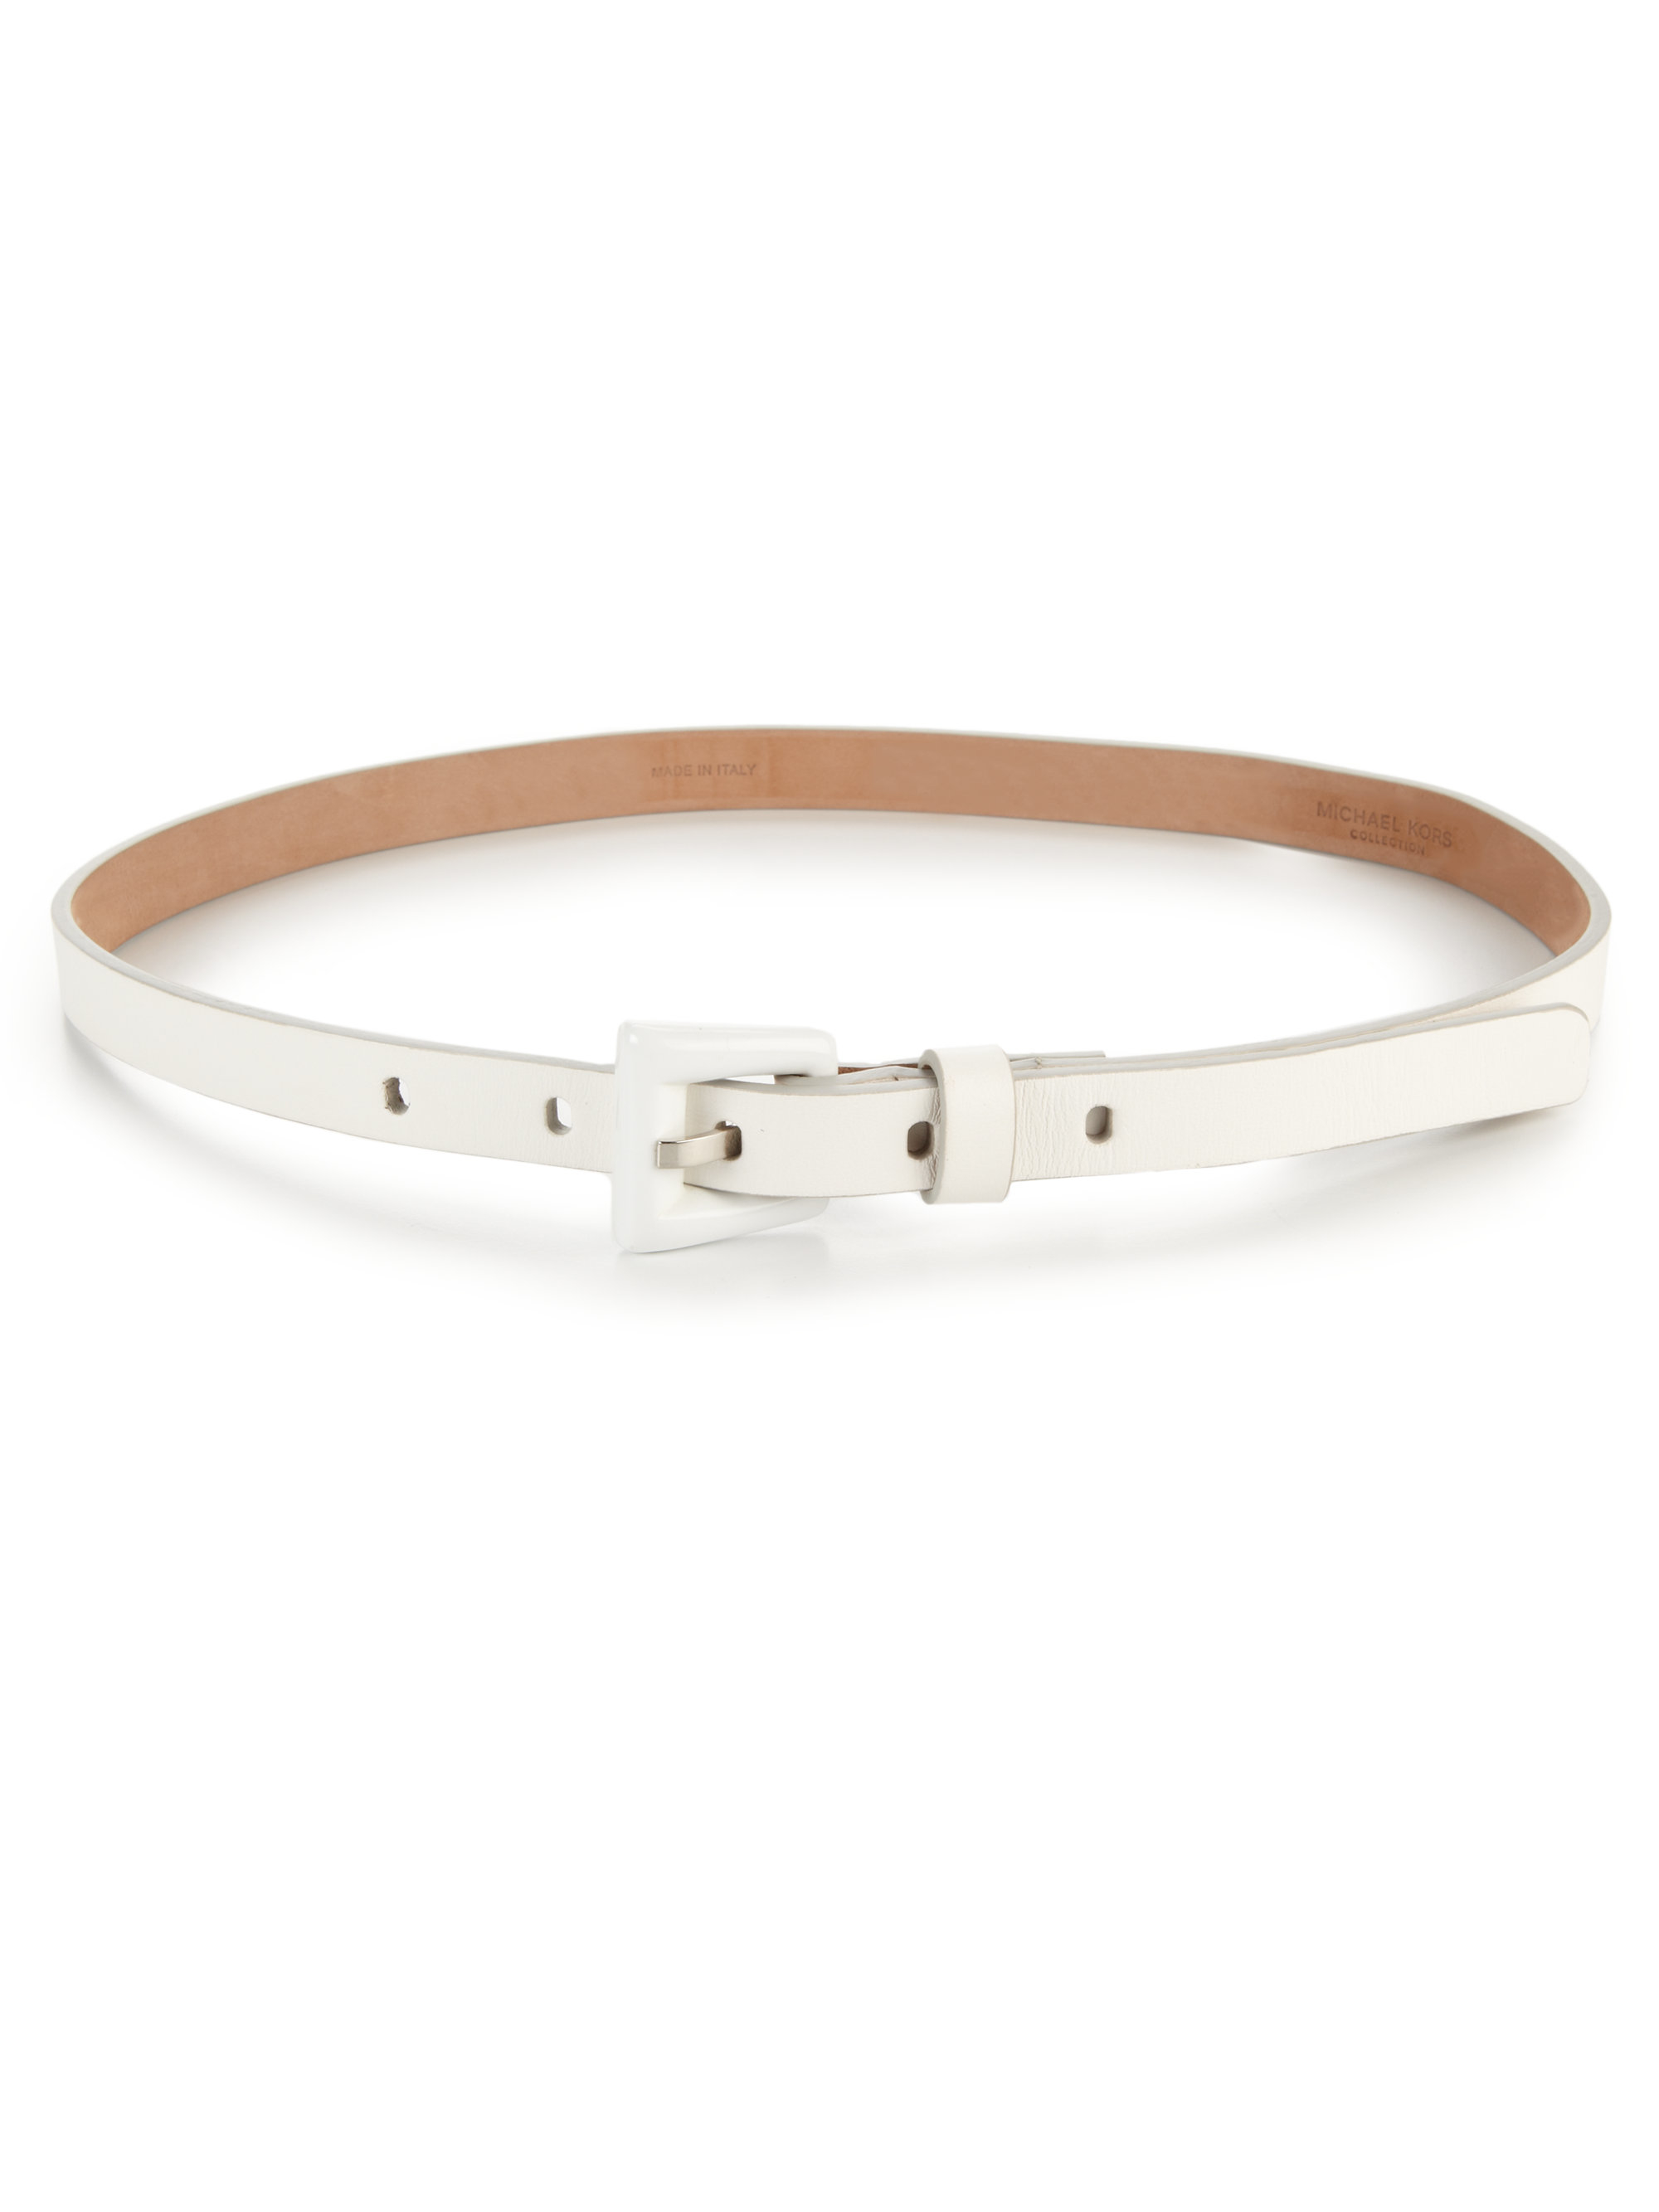 Lyst - Michael Kors Leather Buckle Waist Belt in White